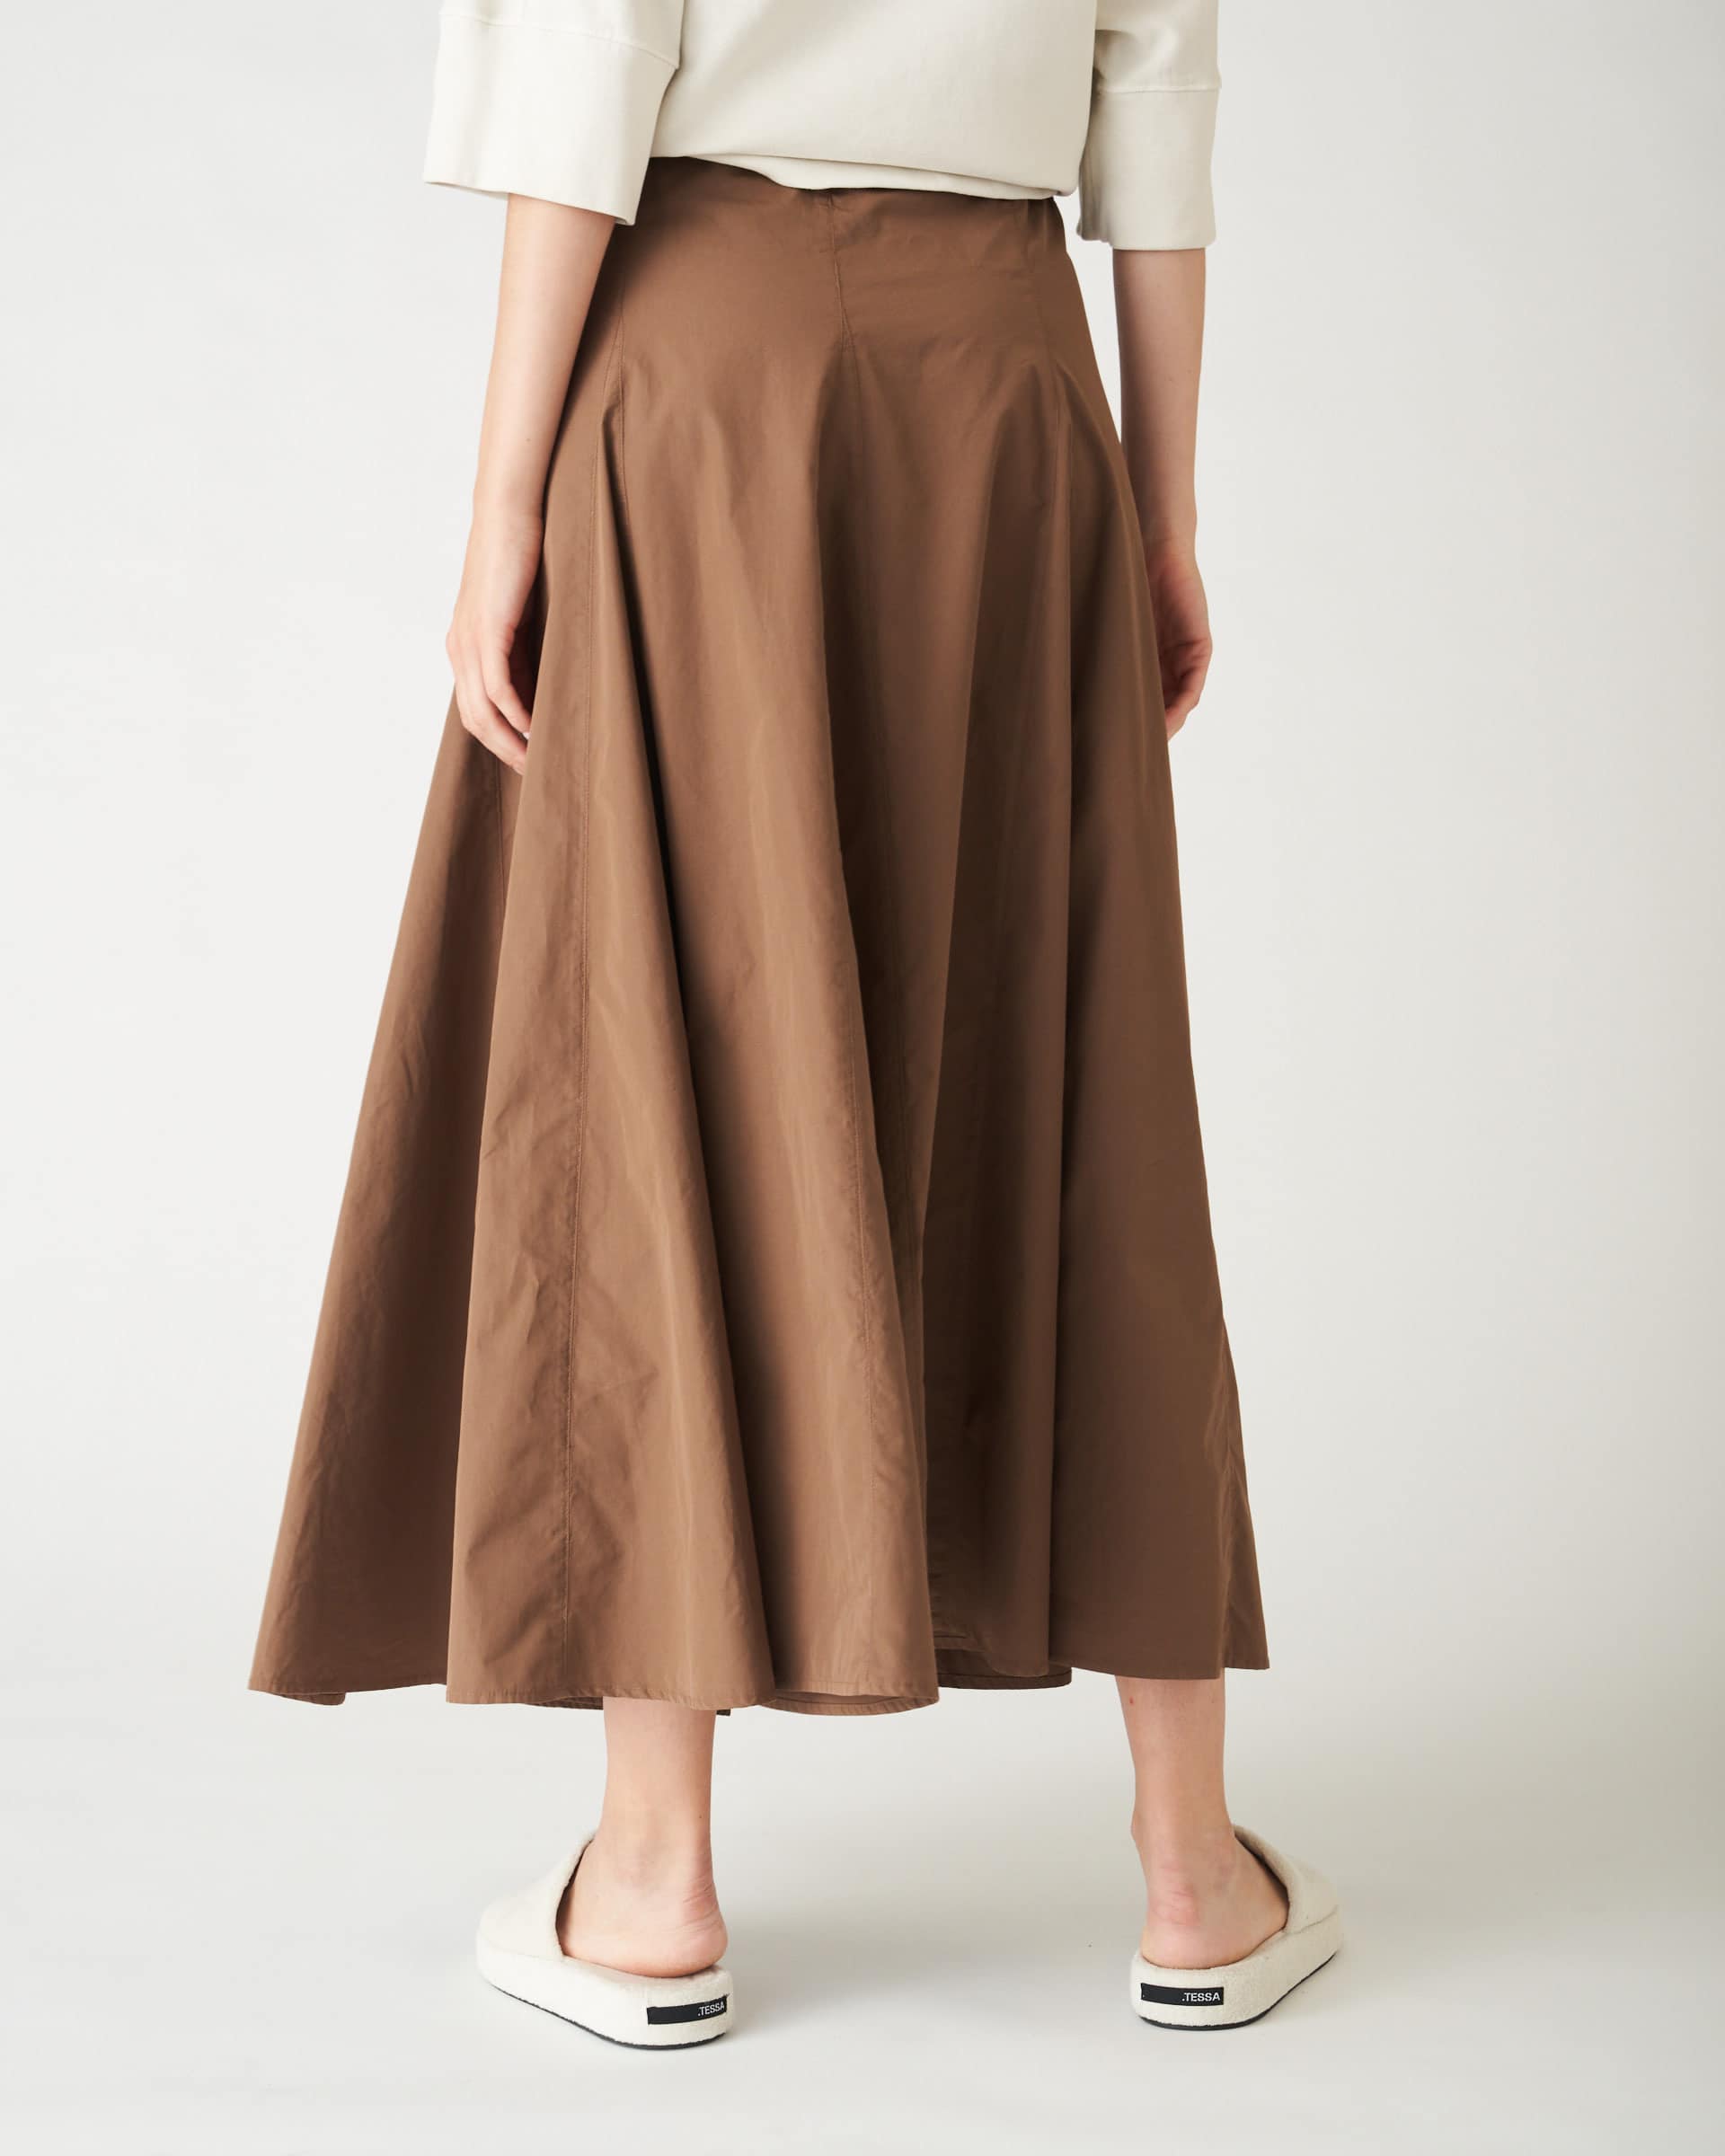 The Market Store | Segmented Cotton Skirt